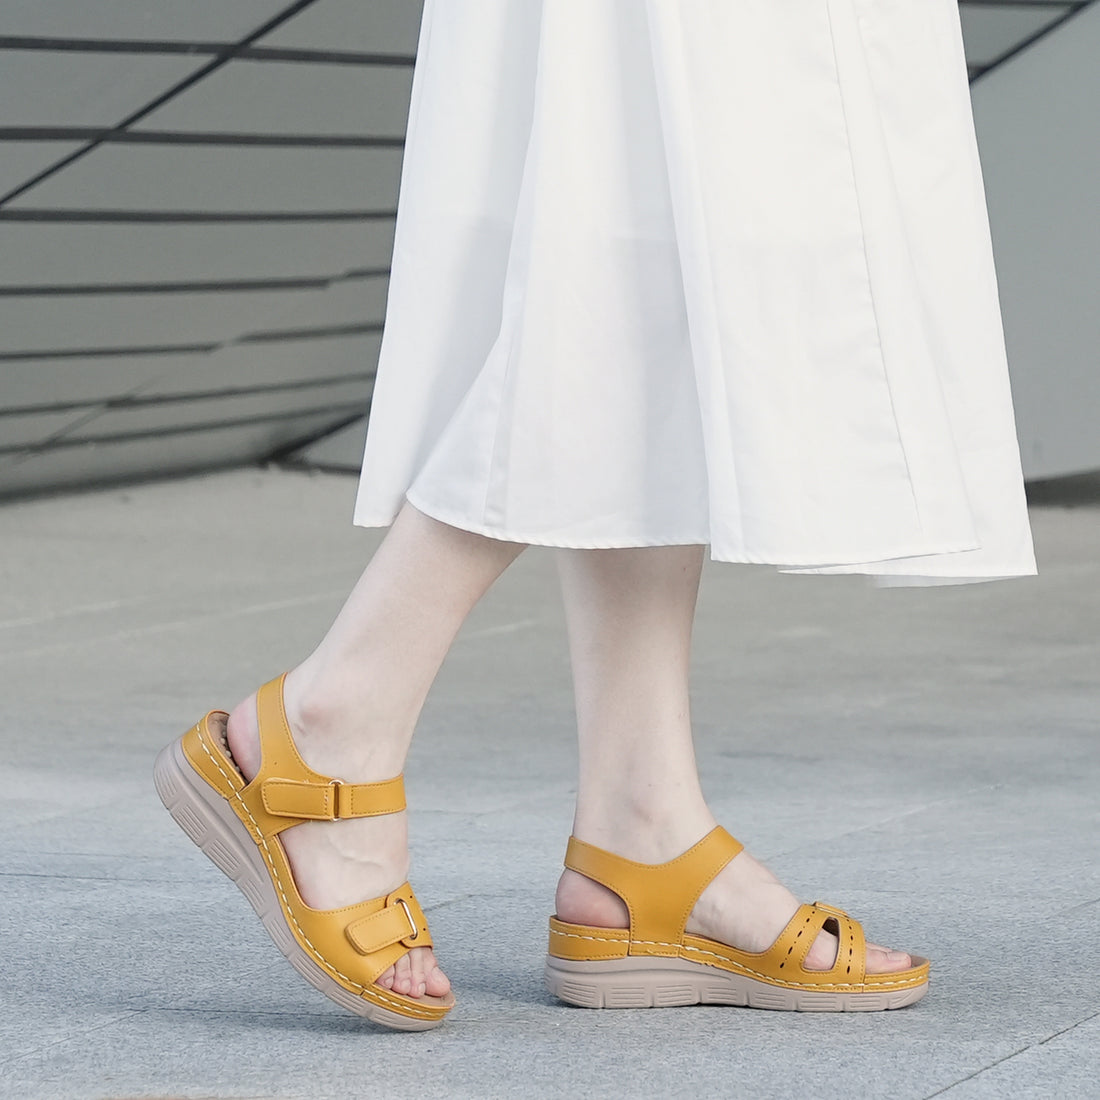 Ortho+rest Comfortable Walking Sandals Orthotic Dress Sandals – Women